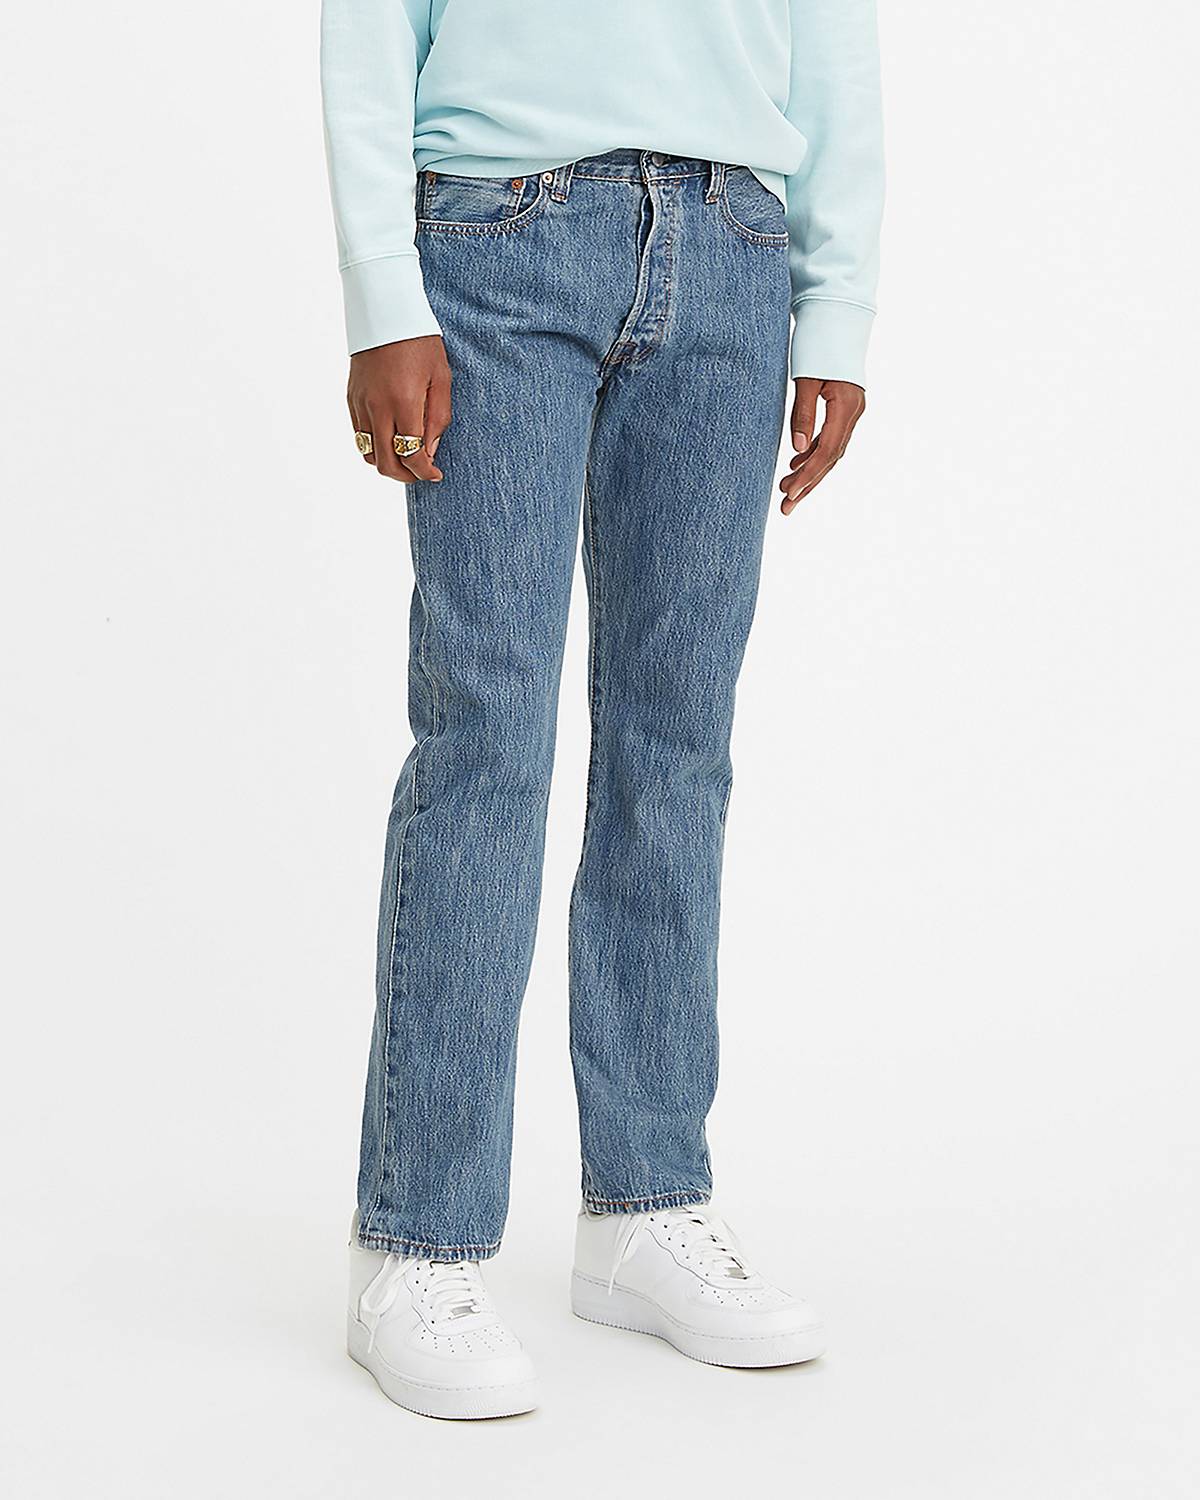 Model wearing 501® Original jeans